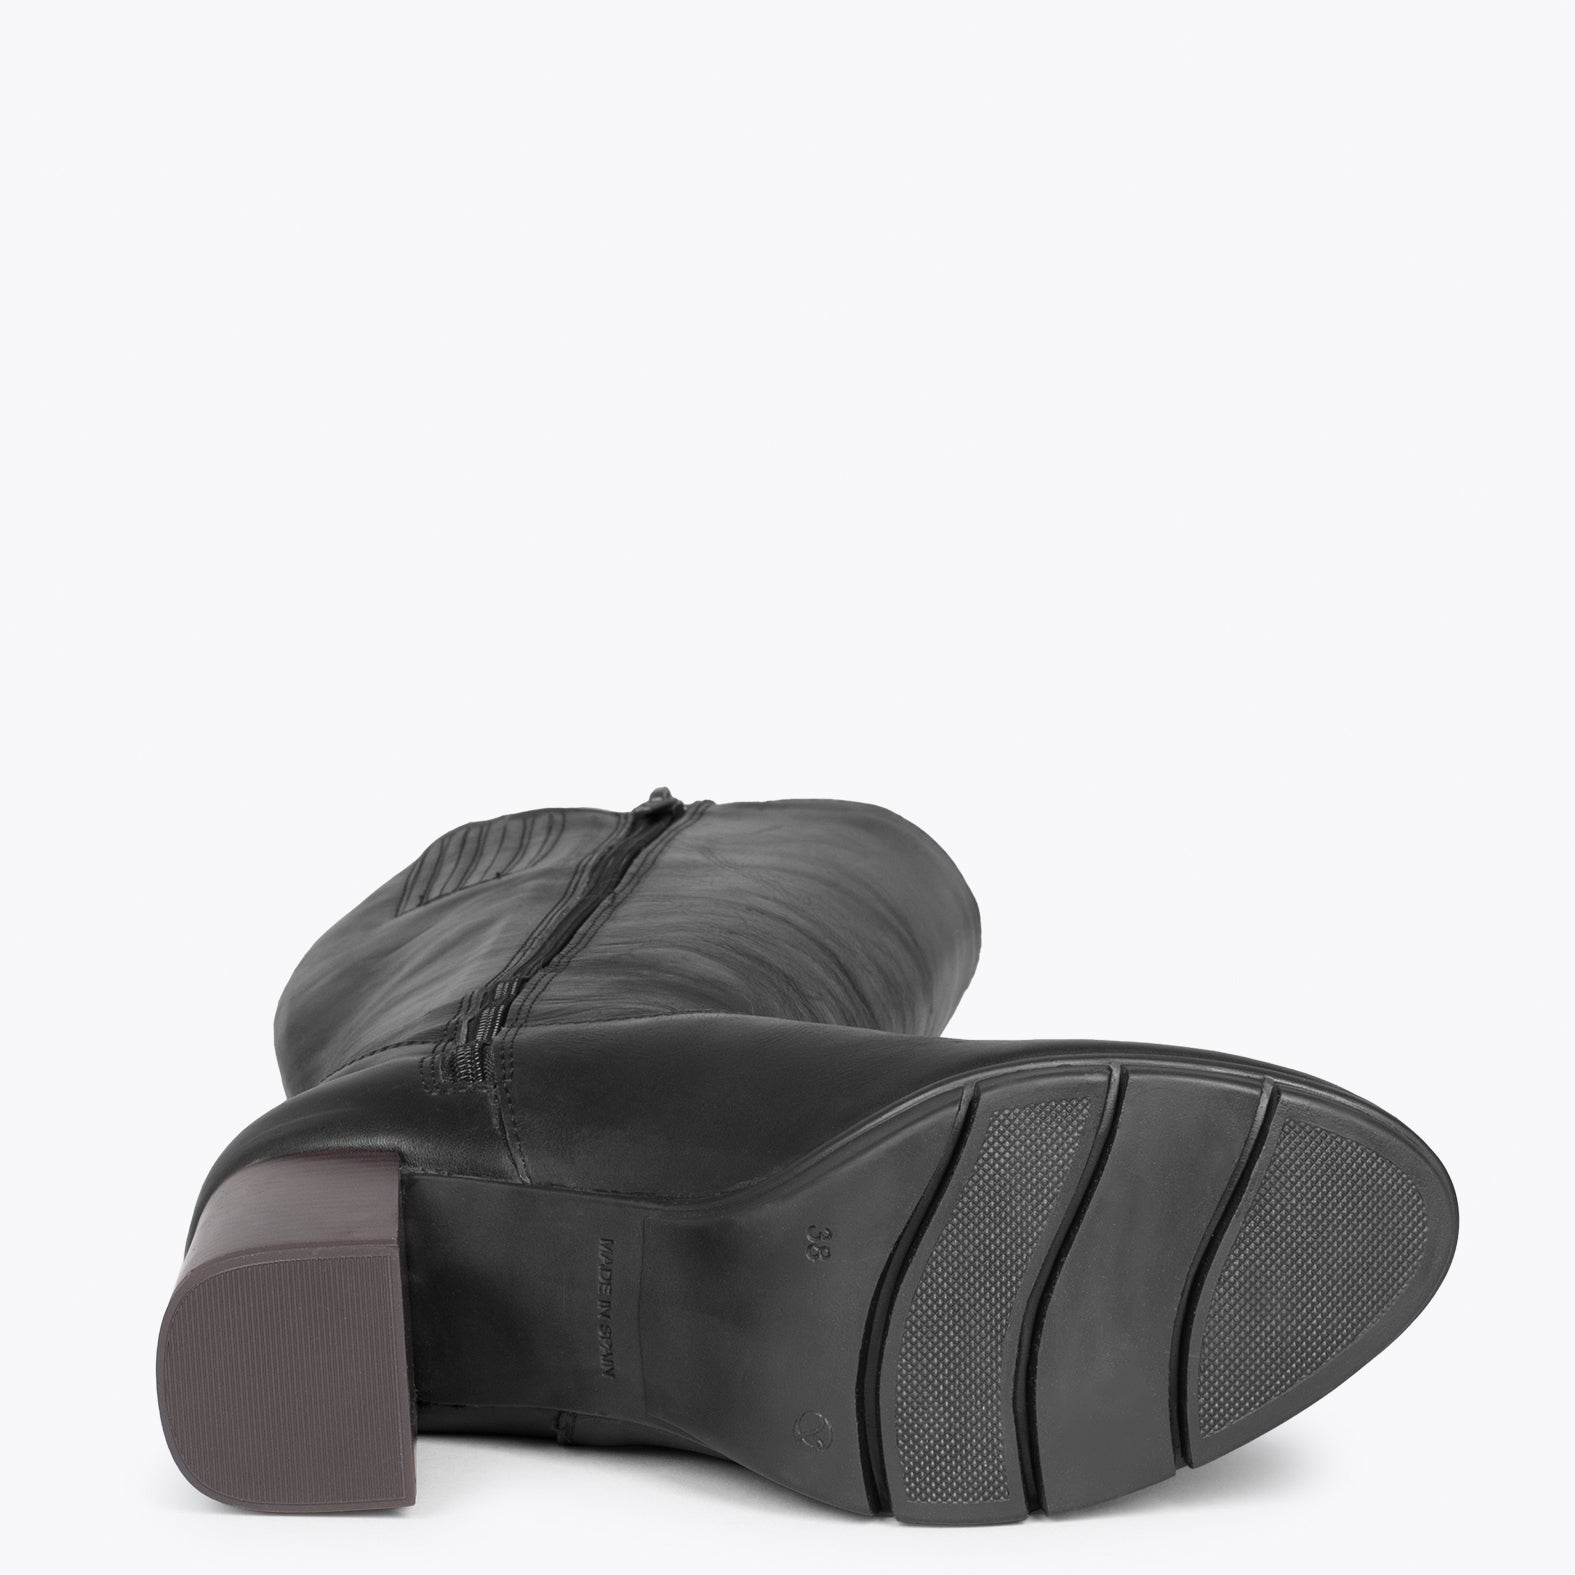 MONTANA – BLACK high heel boot